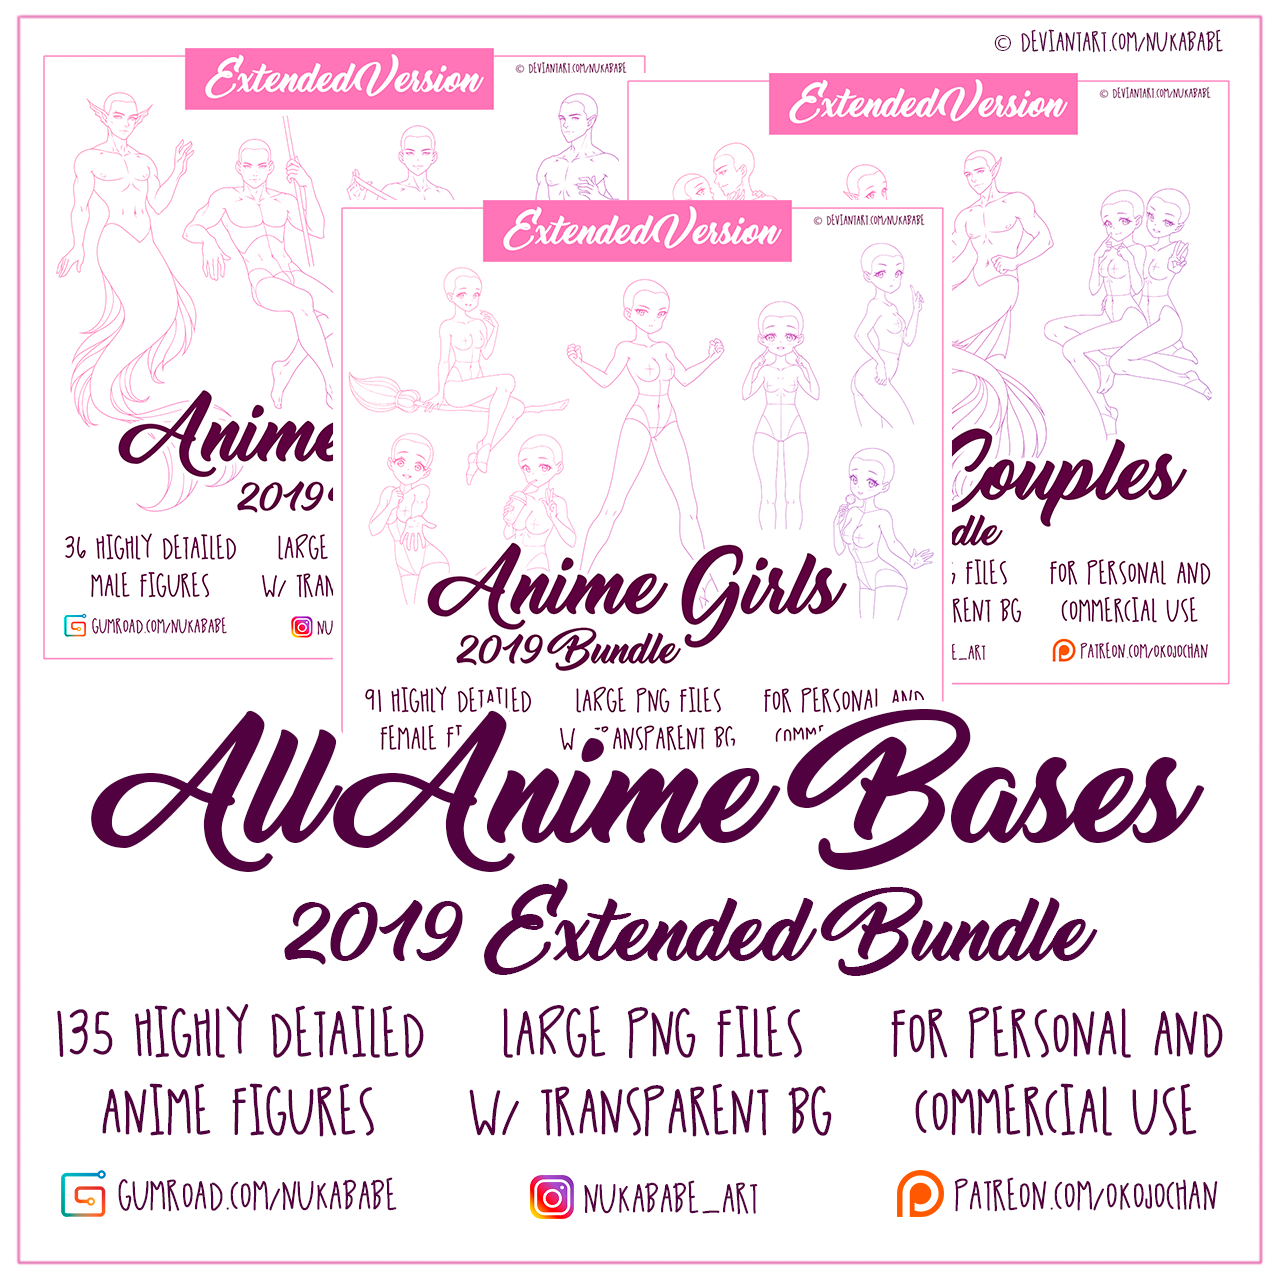 All Anime Bases